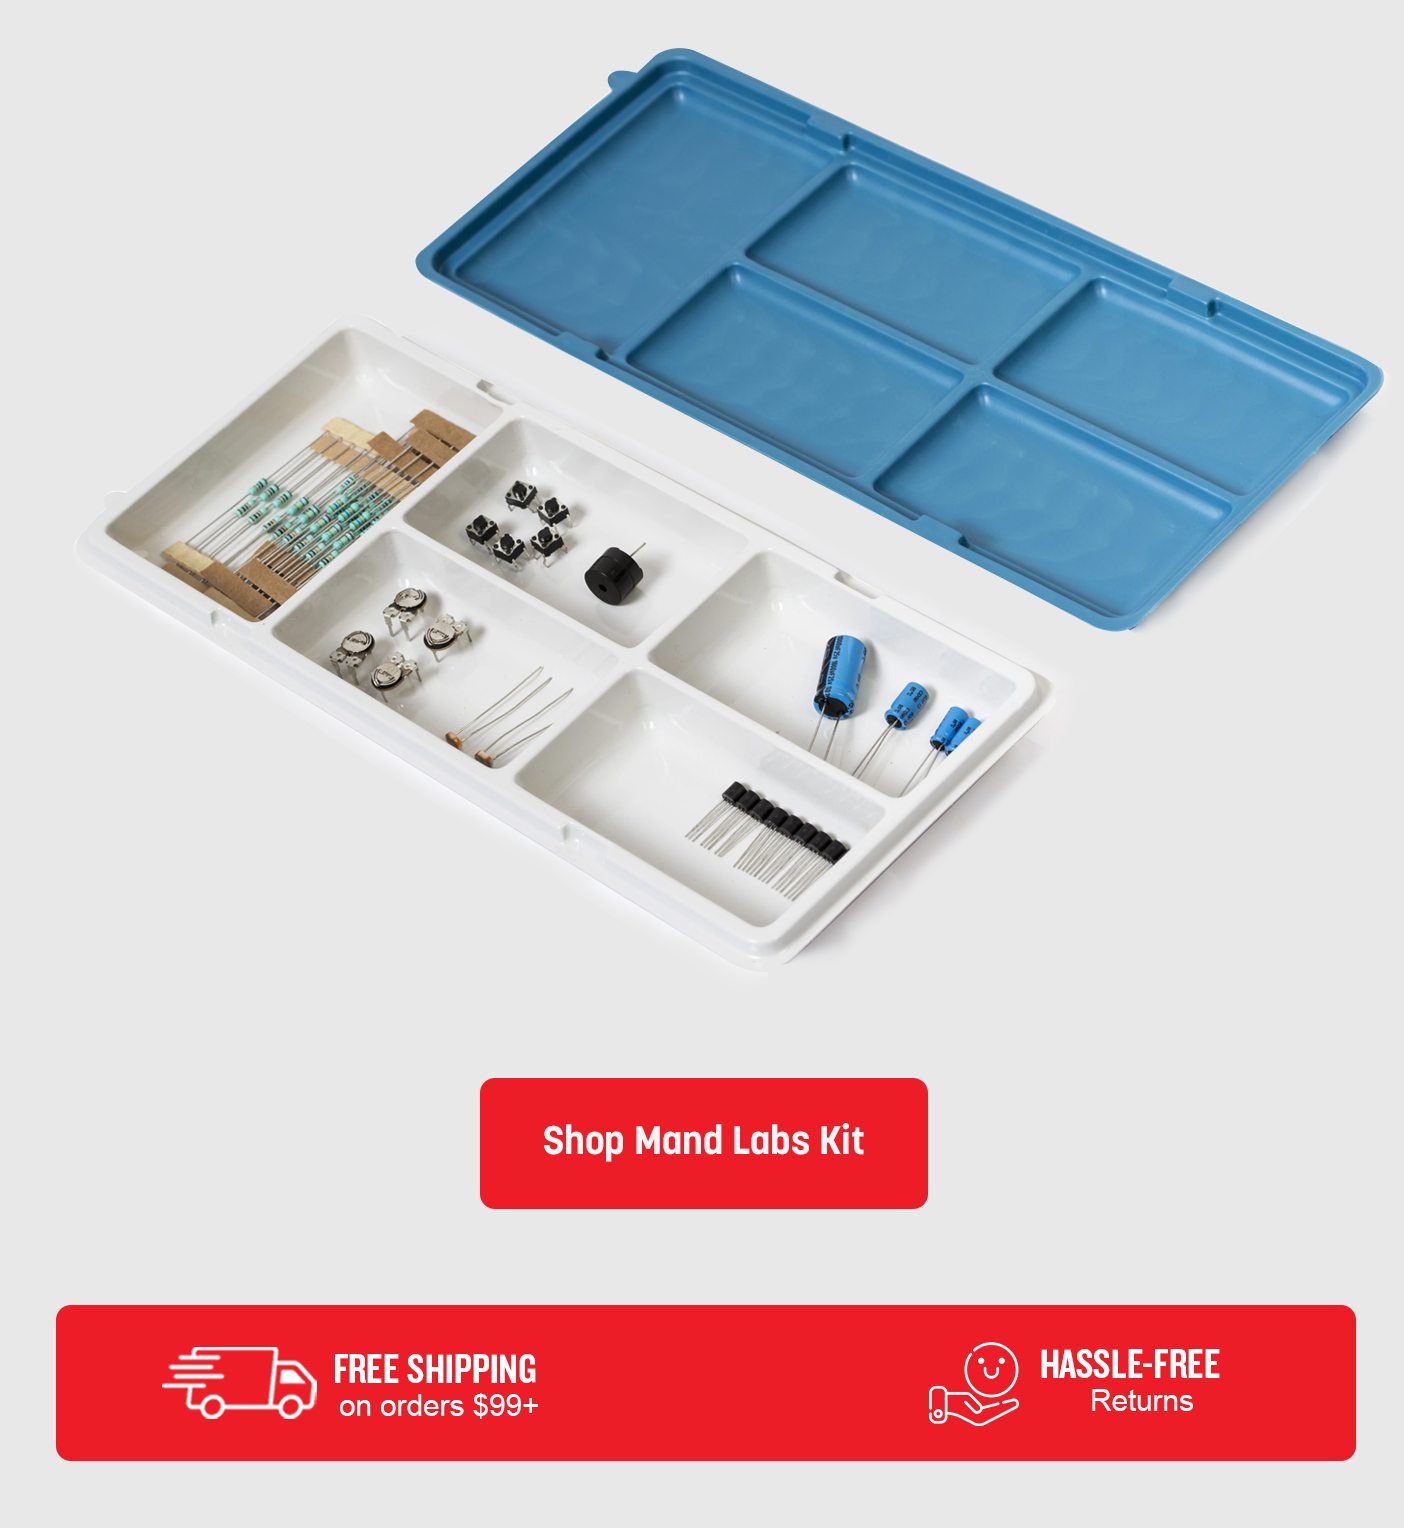 Shop Mand Labs Kit